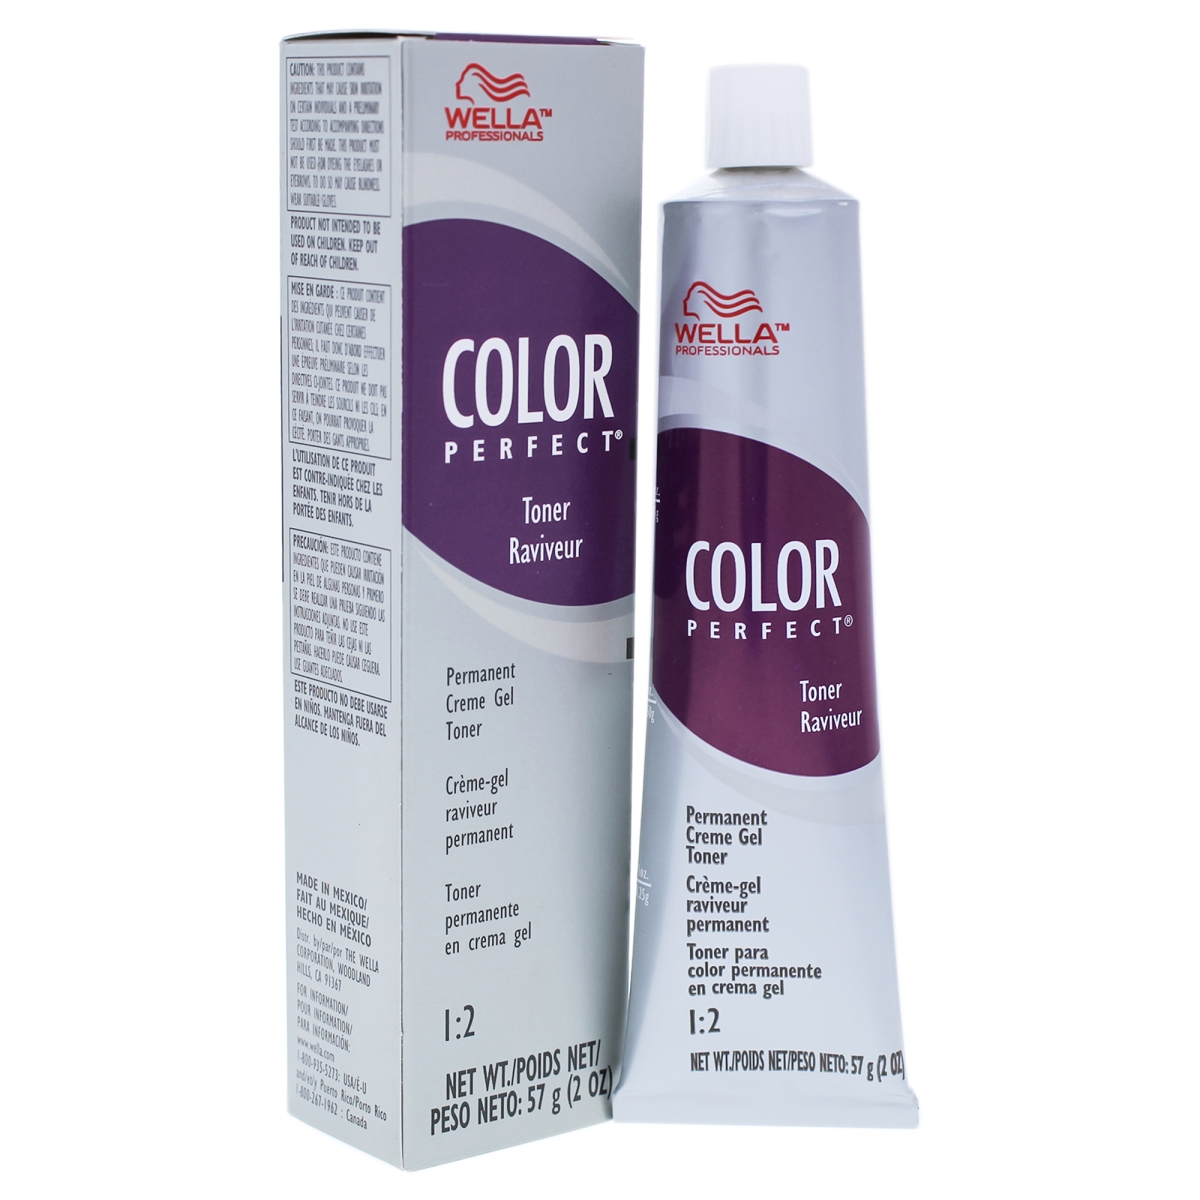 I0086927 Color Perfect Permanent Creme Gel Toner Hair Color For Women - T11a Lightest Ash Blonde - 2 Oz